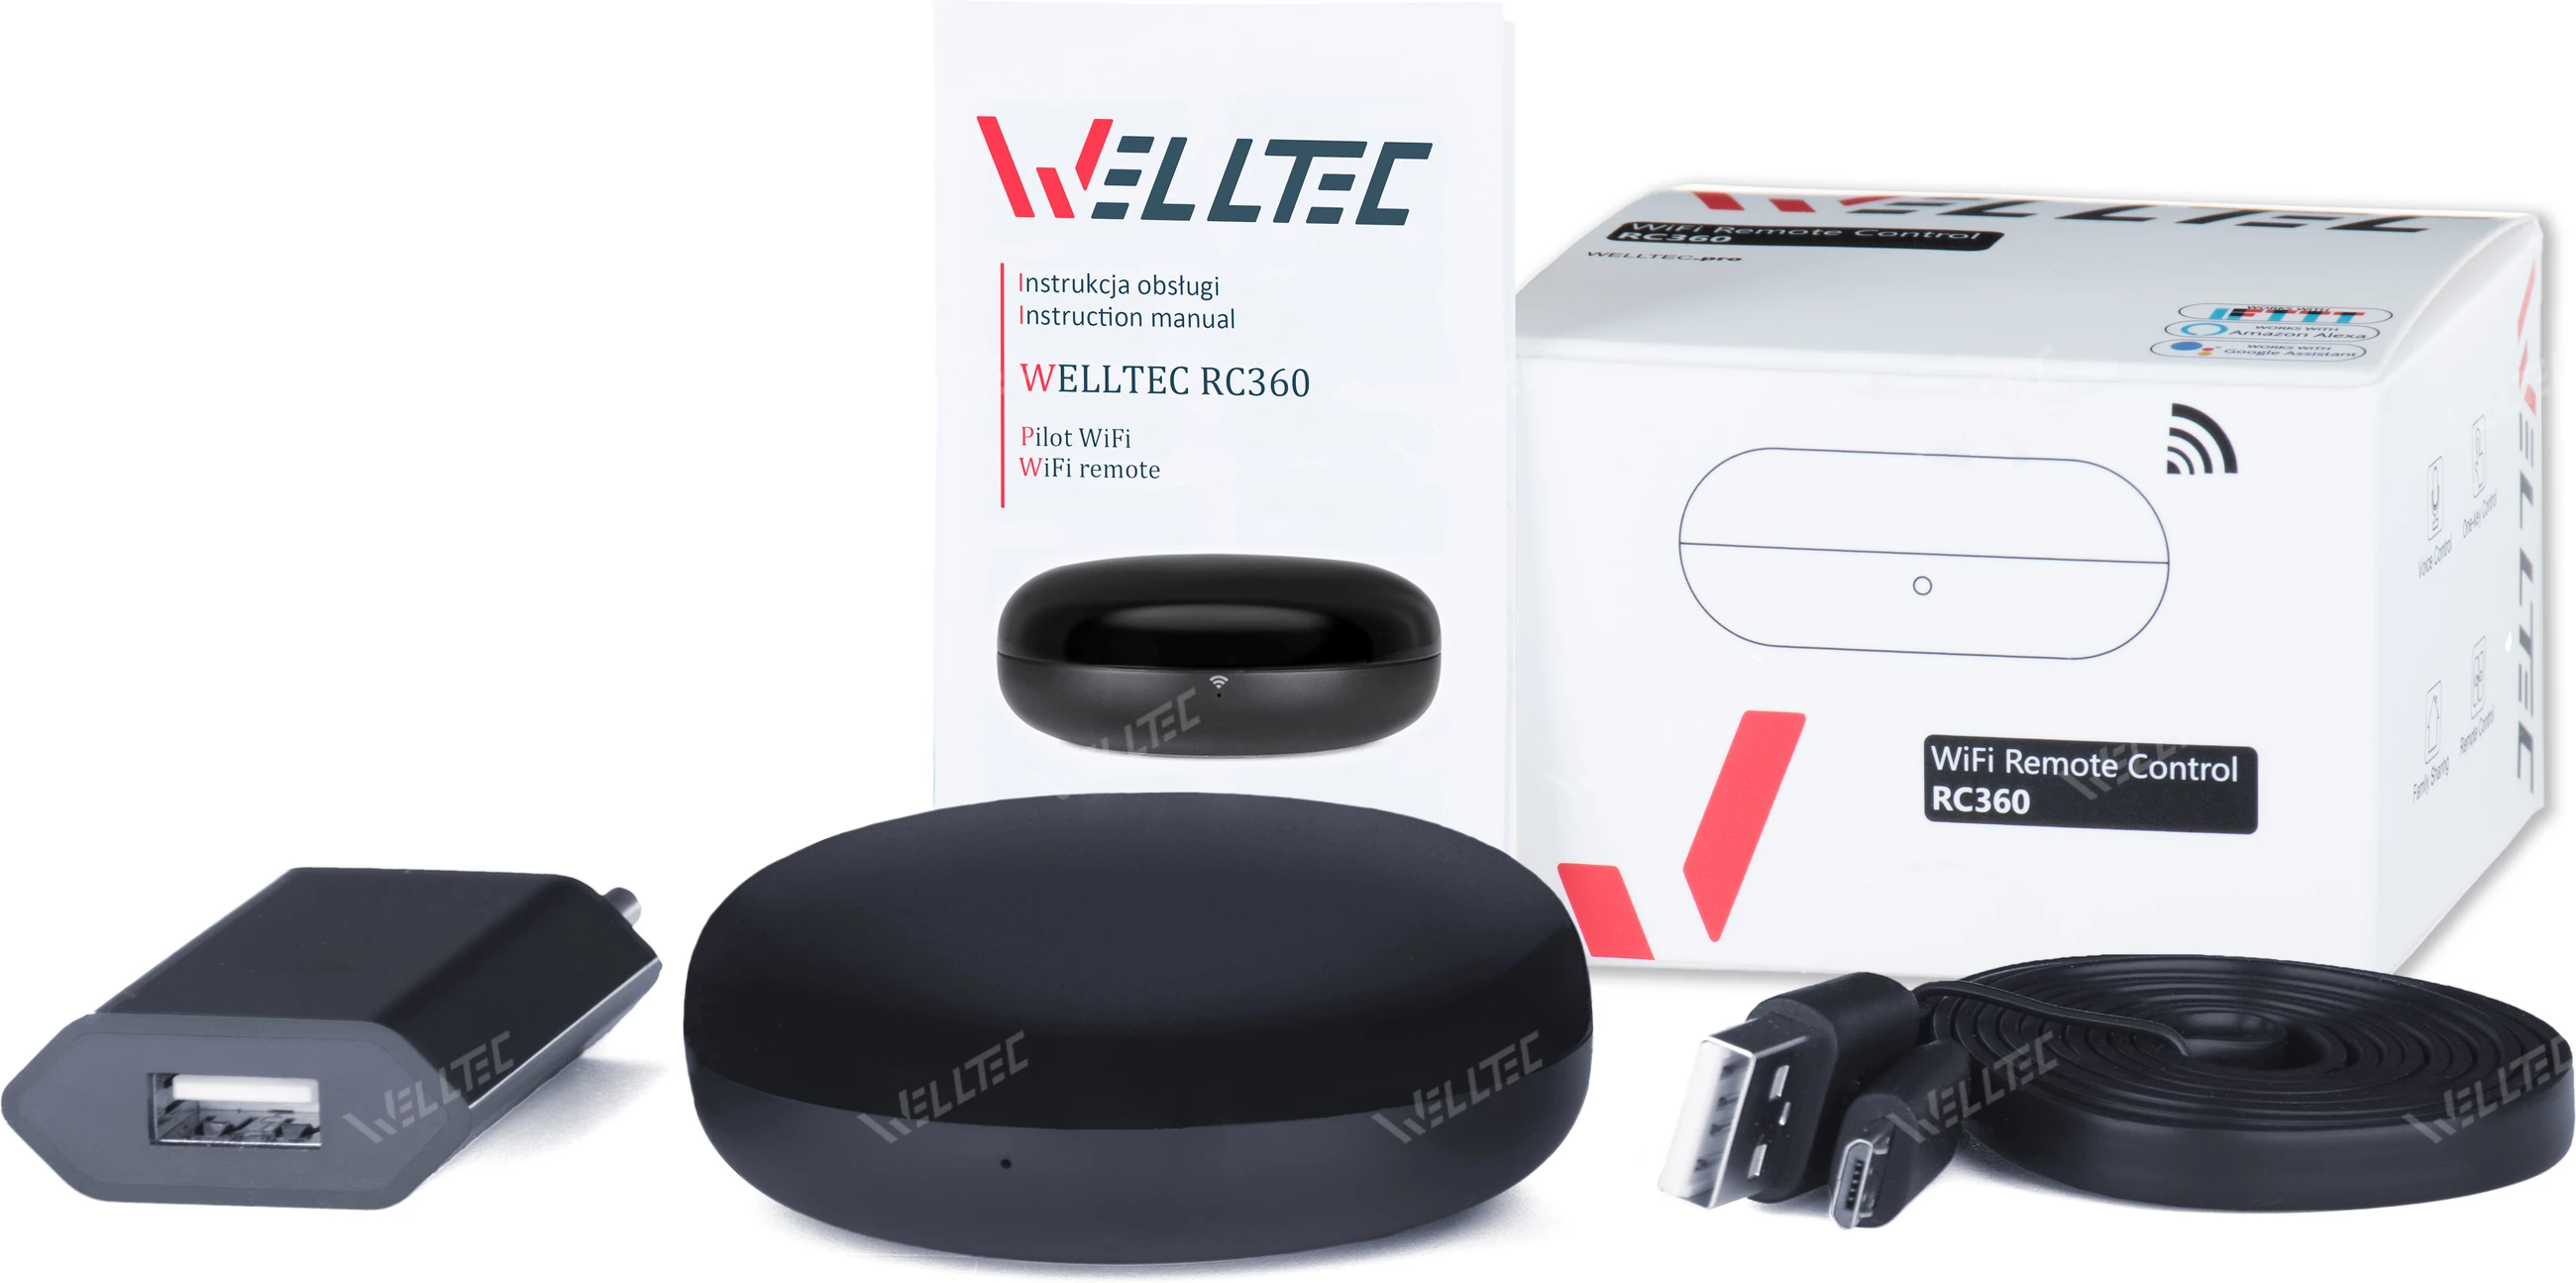 Pilot WiFi Welltec RC360